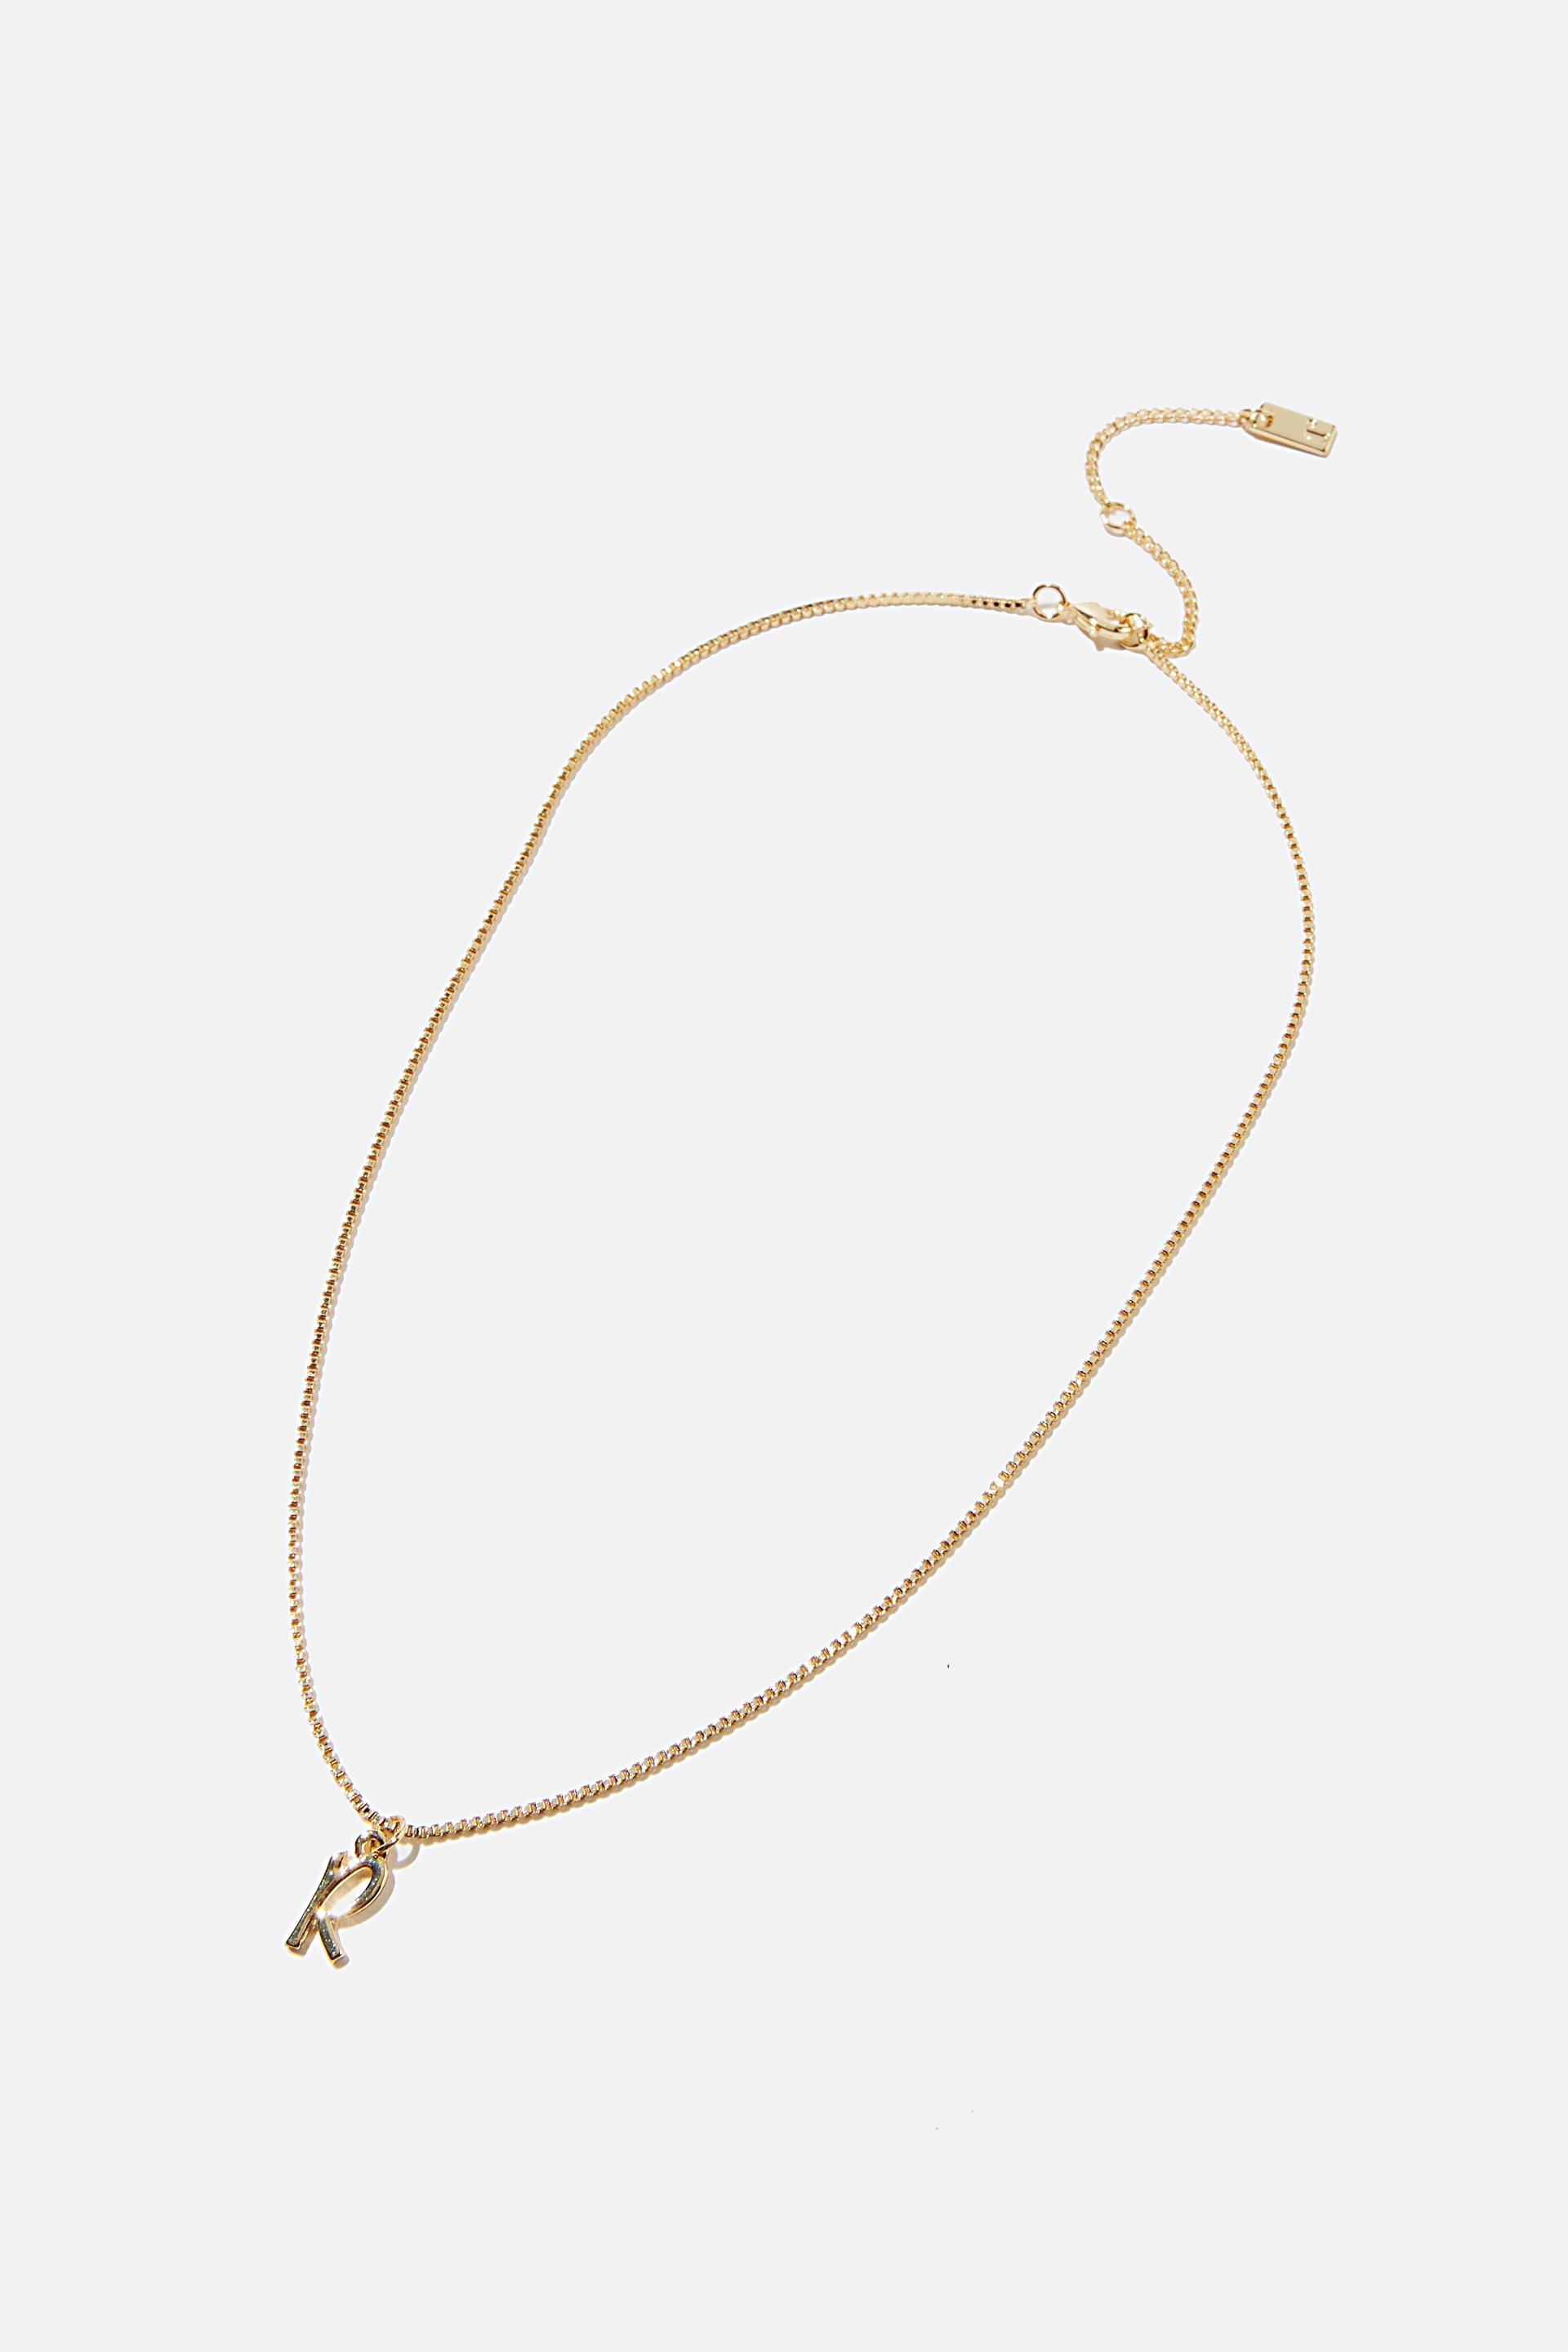 Rubi - Premium Pendant Necklace - Gold plated r